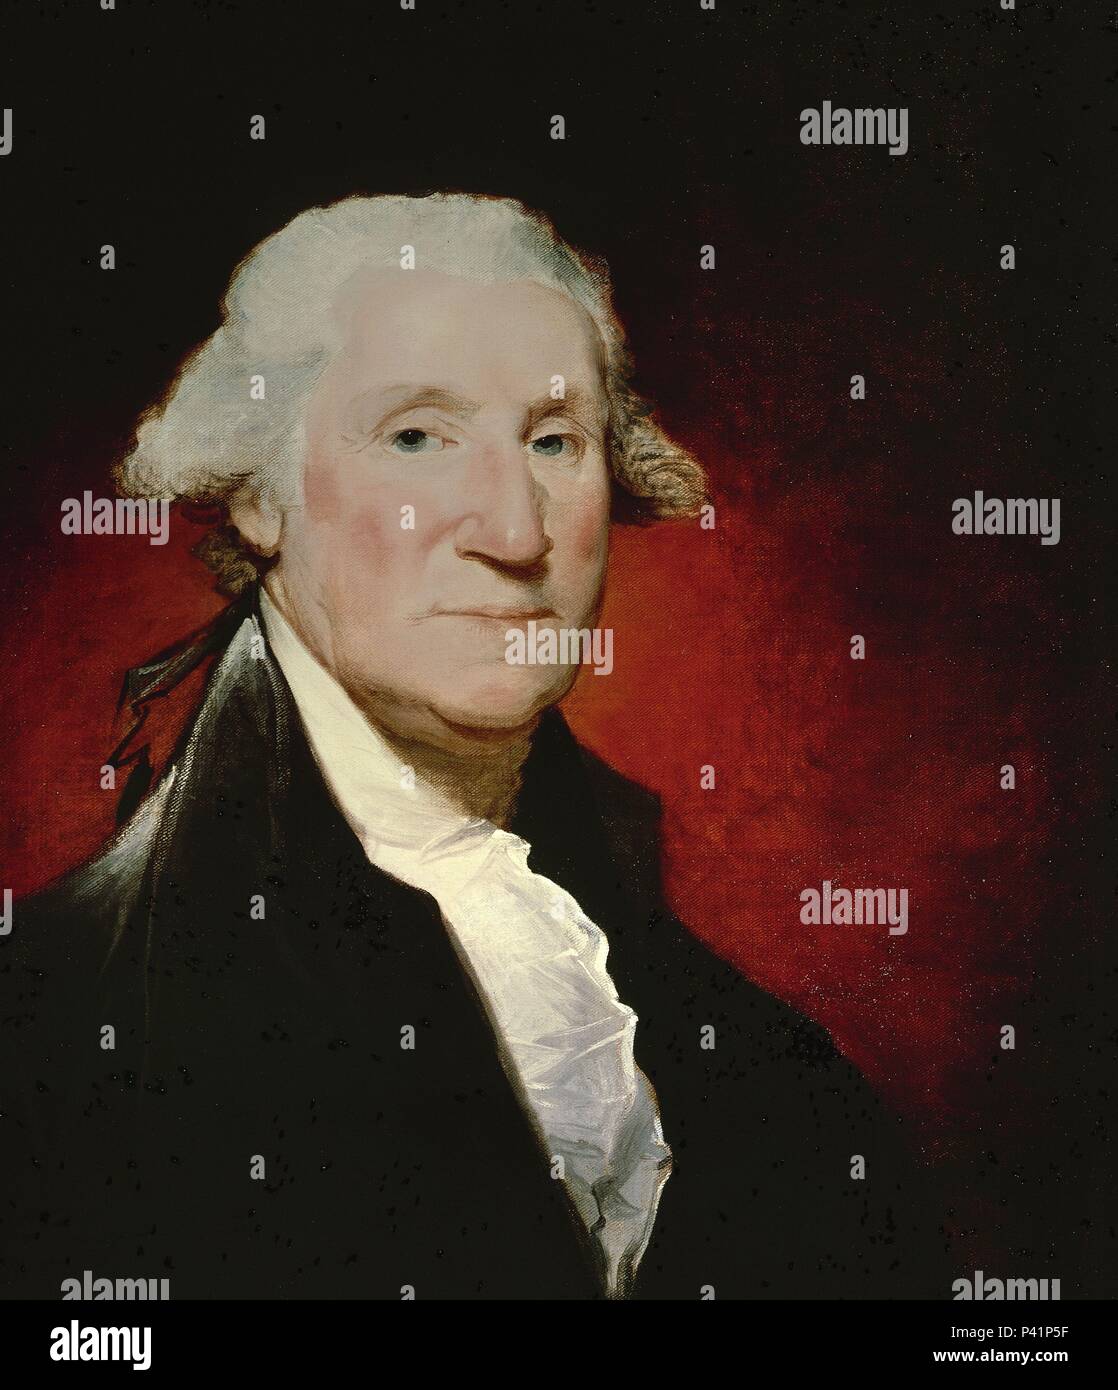 RETRATO DE GEORGE WASHINGTON (1732/1799) PRIMER PRESIDENTE DE LOS ESTADOS UNIDOS DE AMERICA - SIGLO XVIII. Author: Gilbert Stuart (1755-1828). Location: NATIONAL GALLERY, WASHINGTON D. C. Stock Photo